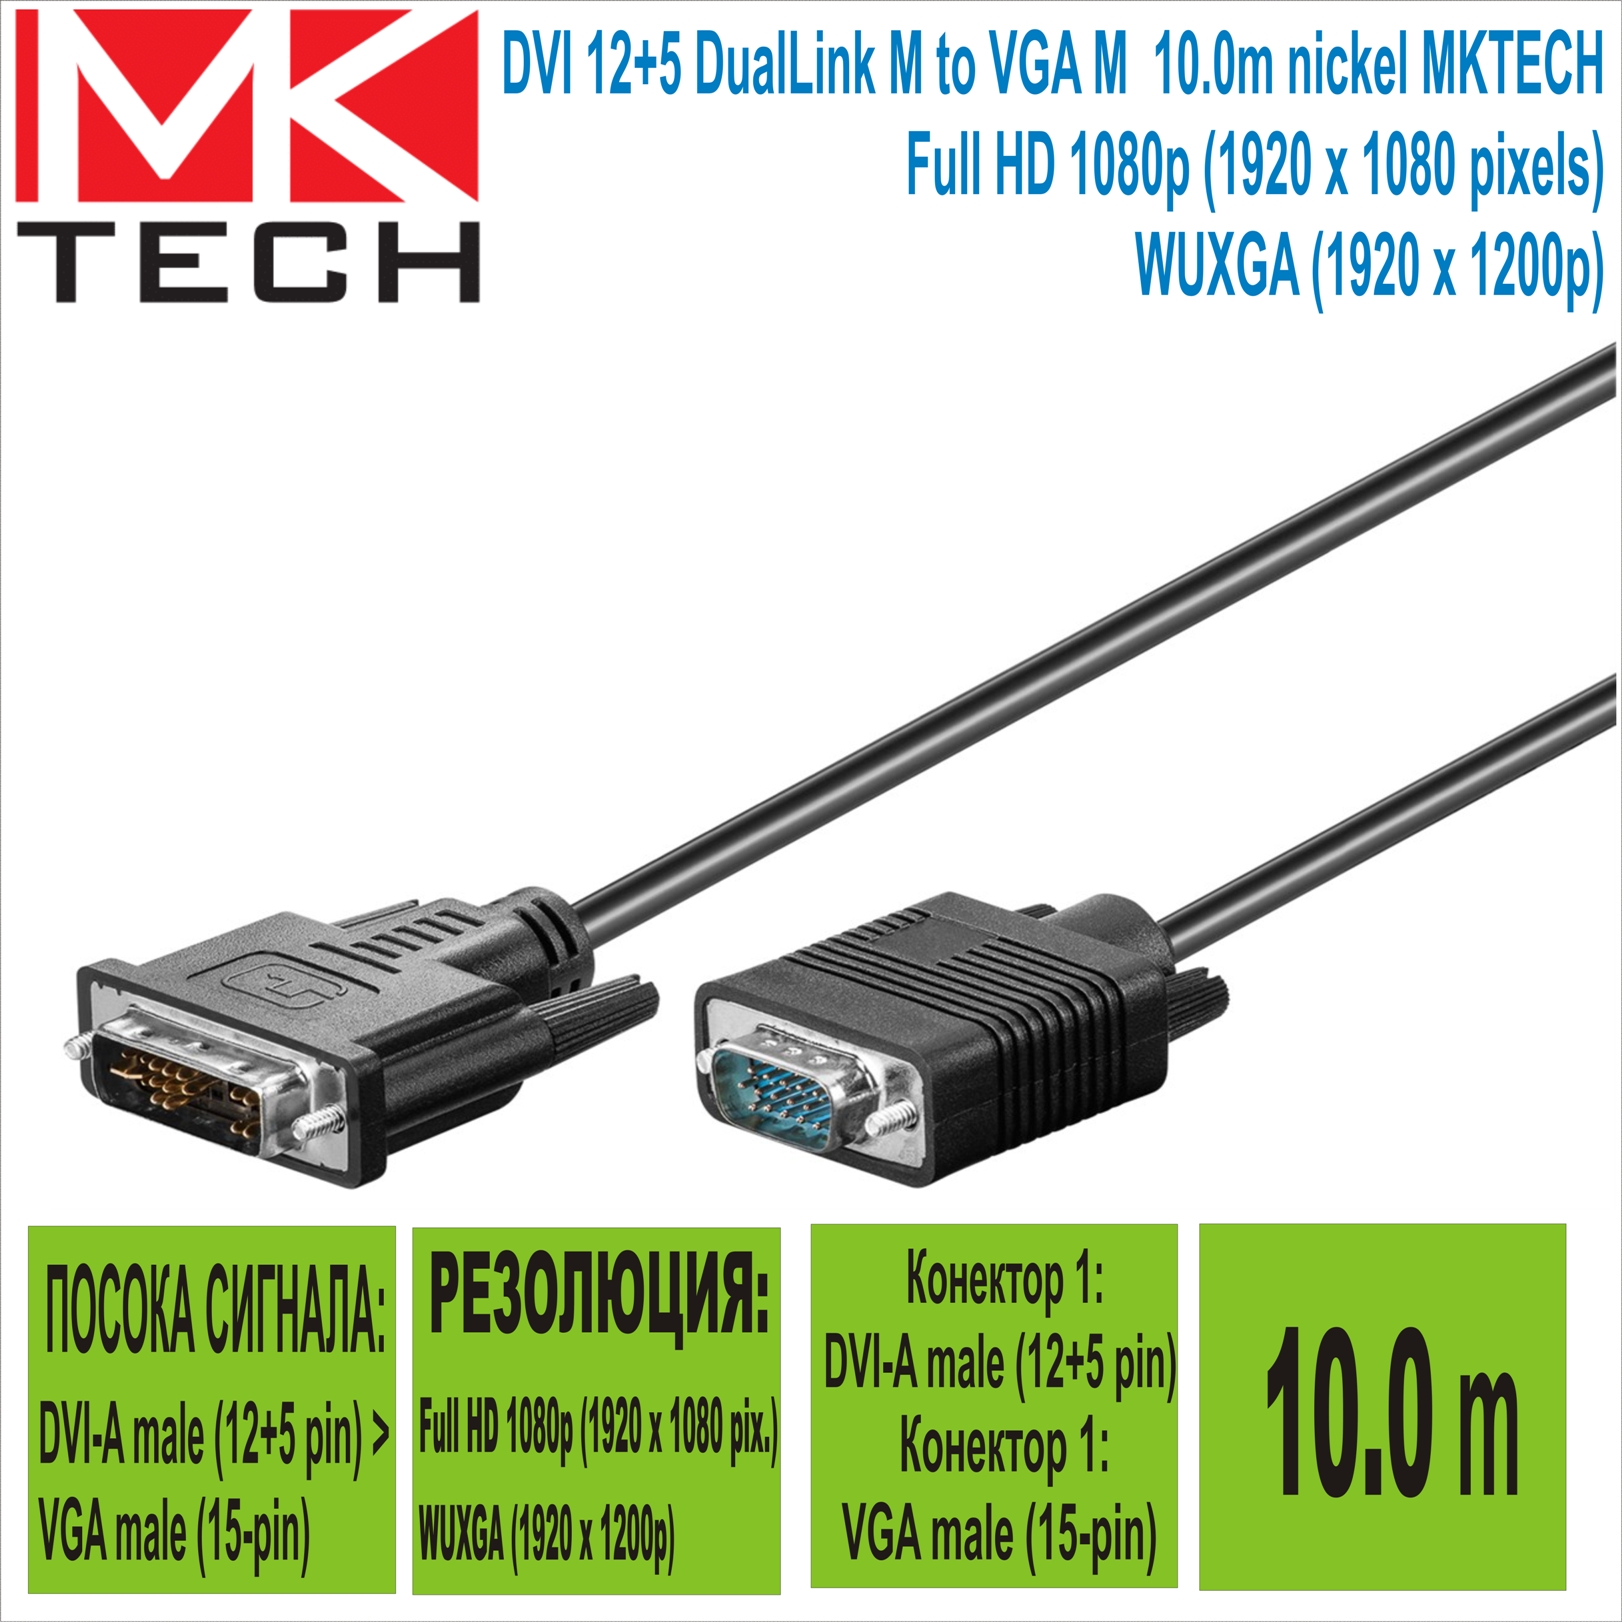 DVI 24+5 DualLink M to VGA M 10.0m nickel MKTECH